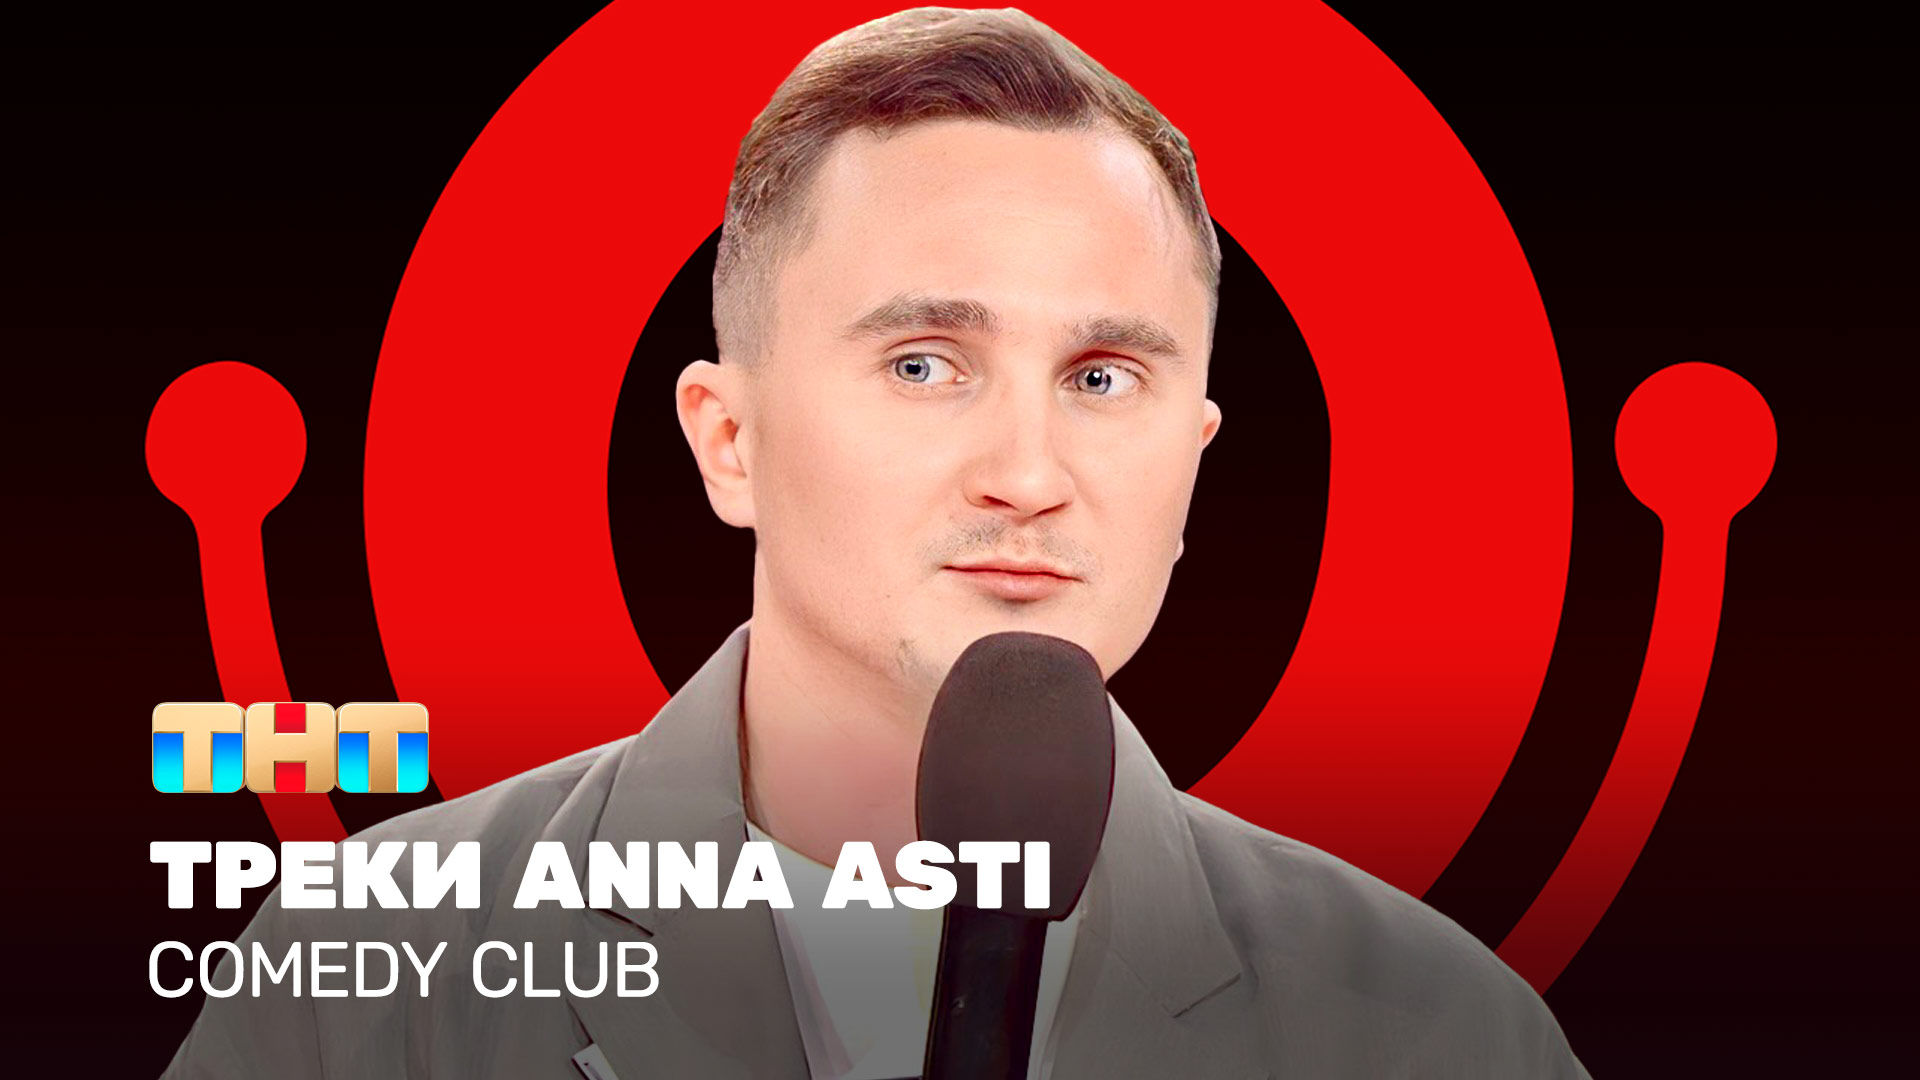 Comedy Club: Треки Anna Asti | Дмитрий Ксенофонтов